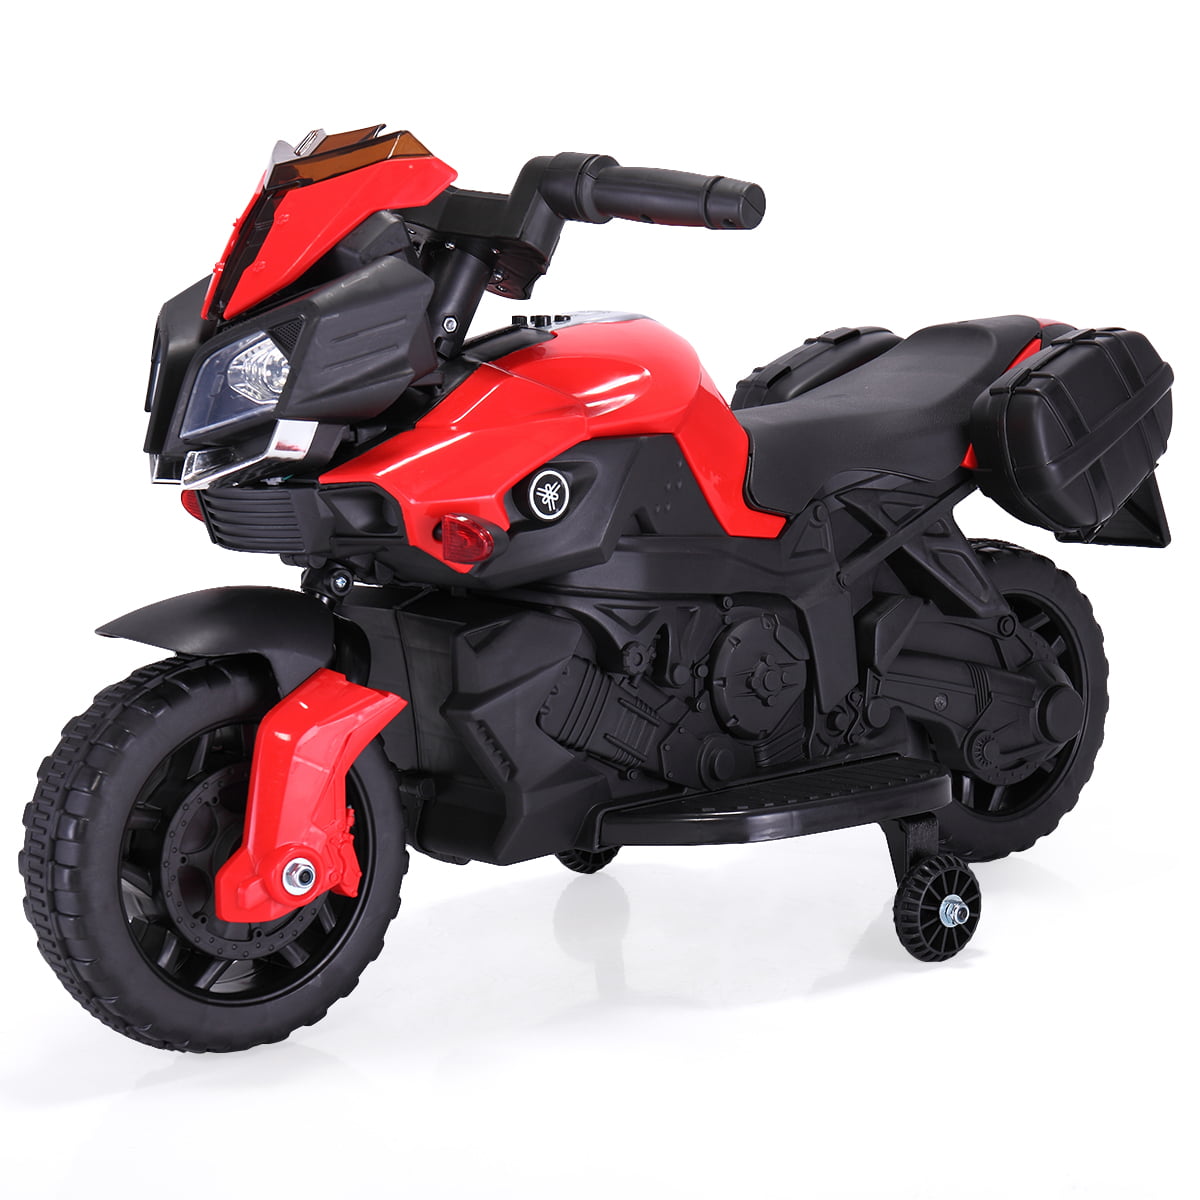 Inertia Motorcycle Toys Gifts Children Kids Motor Bike Model AL